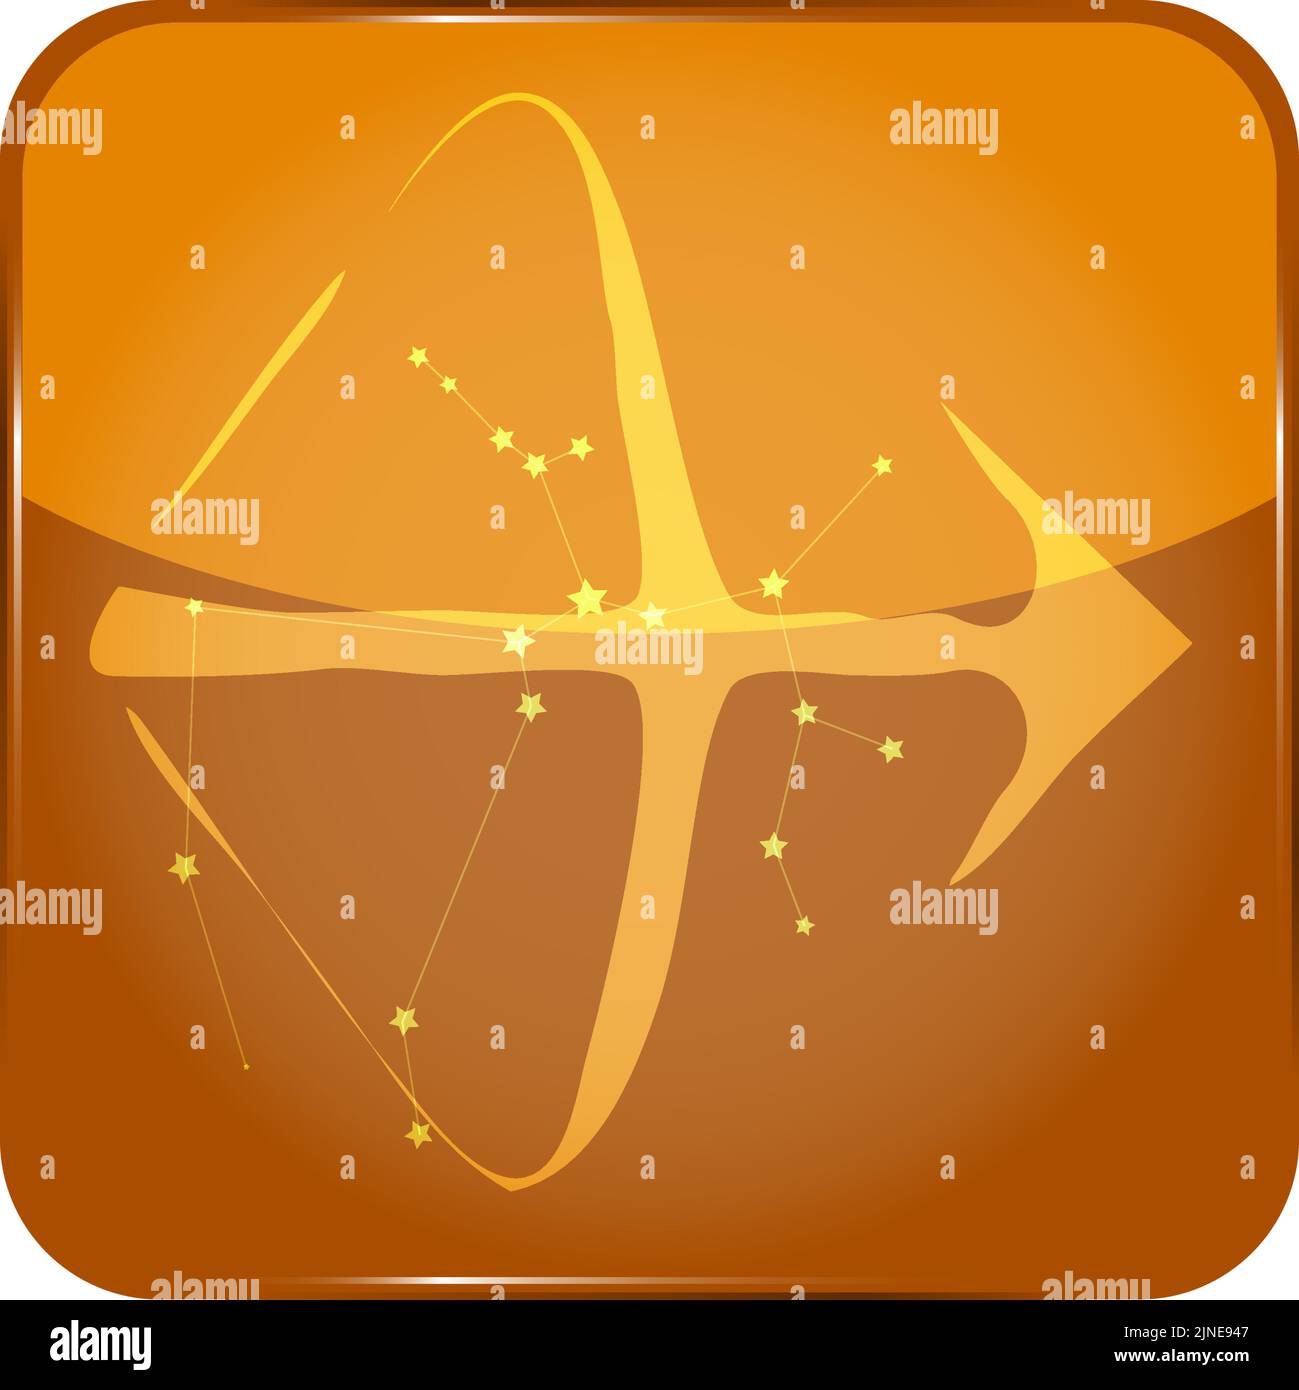 12 constellation yellow button icon with star shape: Sagittarius Stock Vector